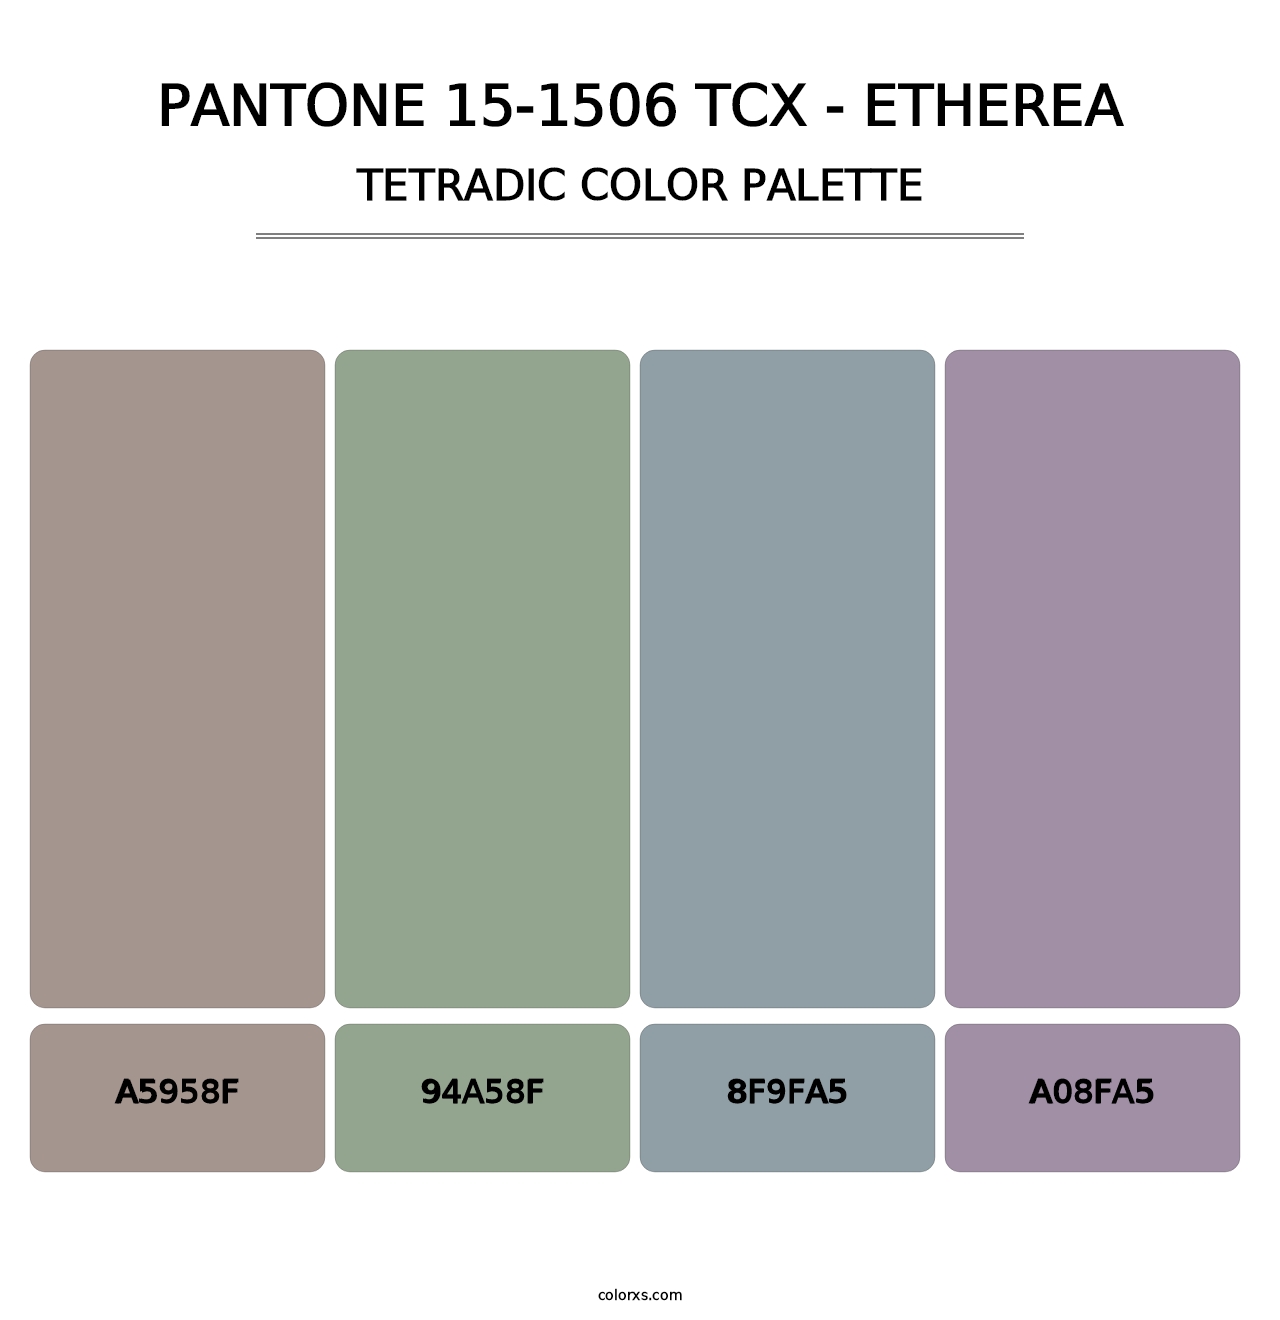 PANTONE 15-1506 TCX - Etherea - Tetradic Color Palette